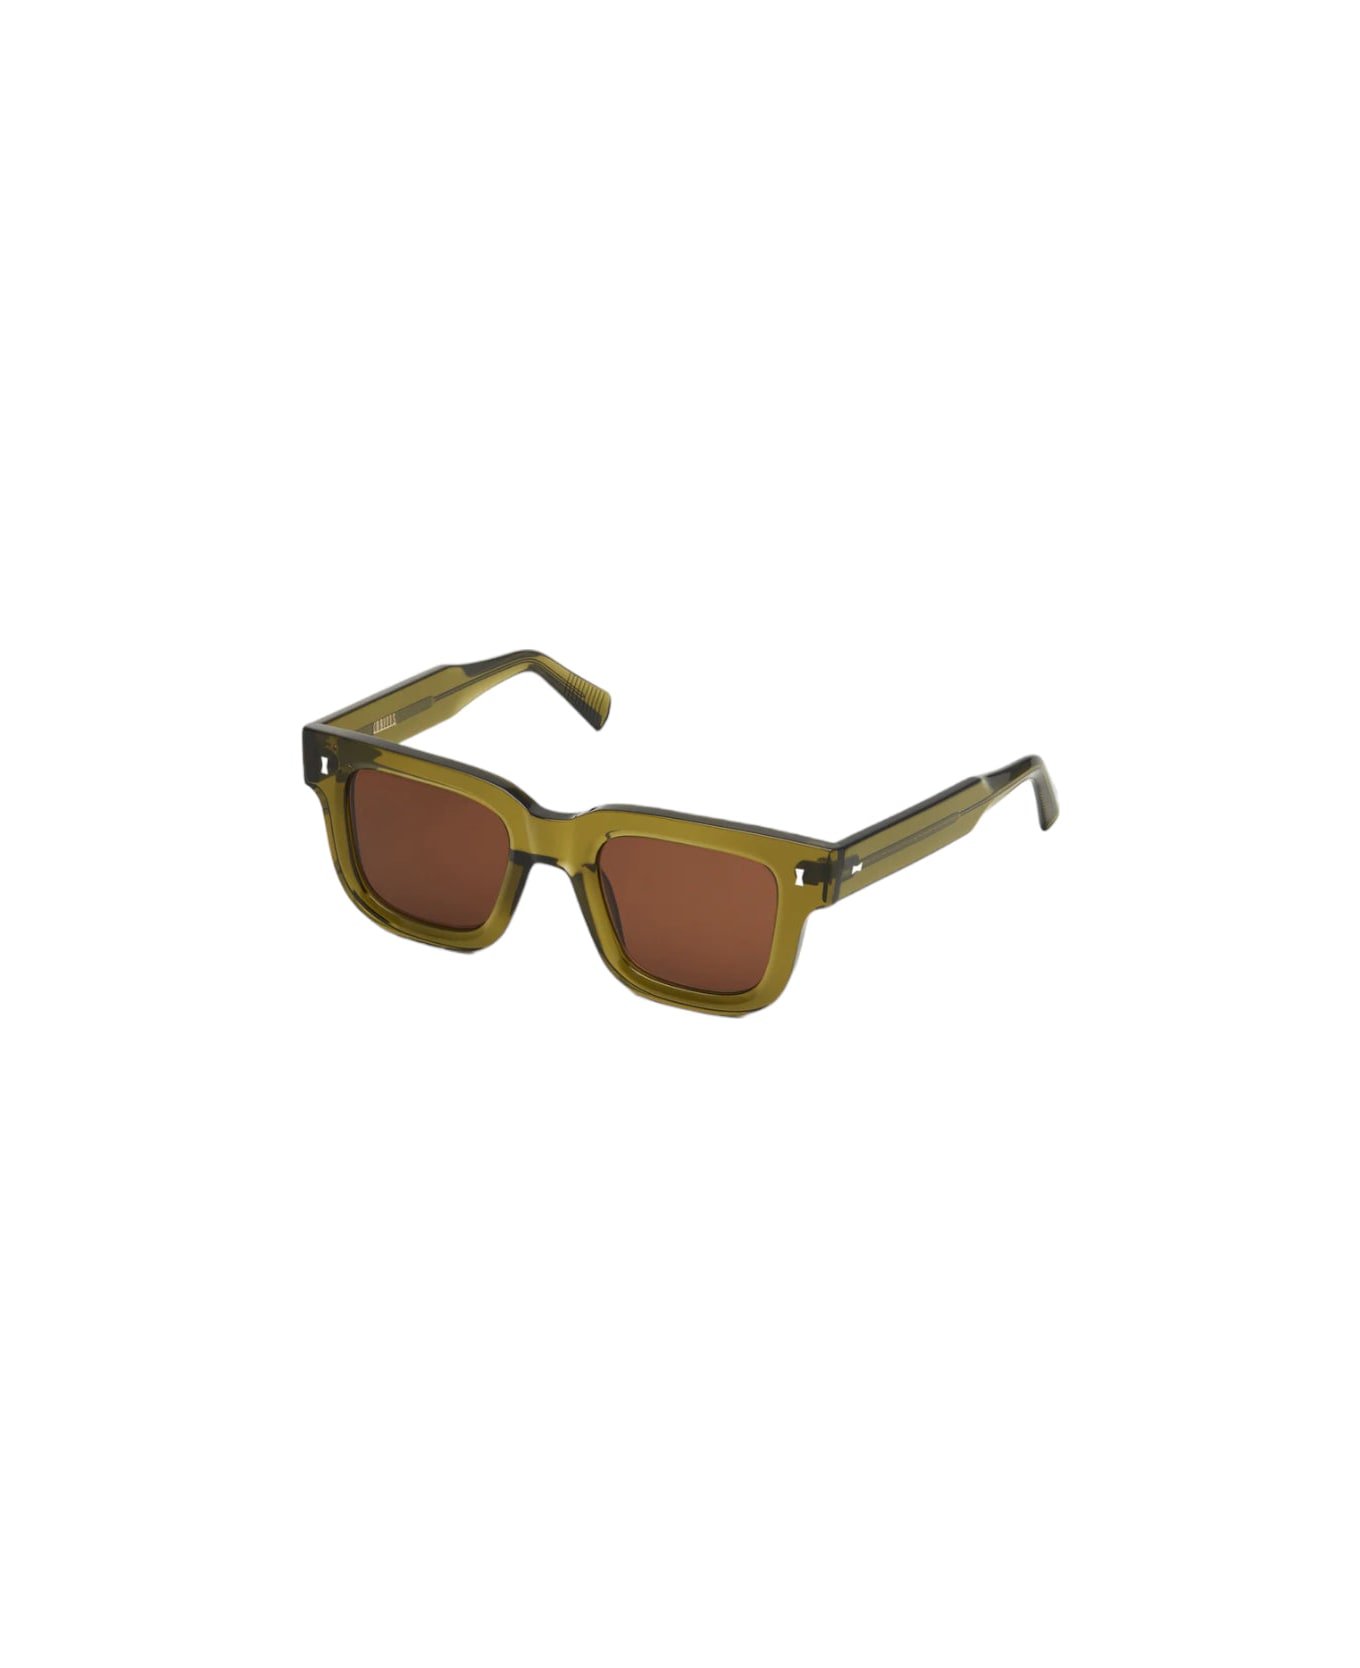 Cubitts Plender - Crystal Green Sunglasses